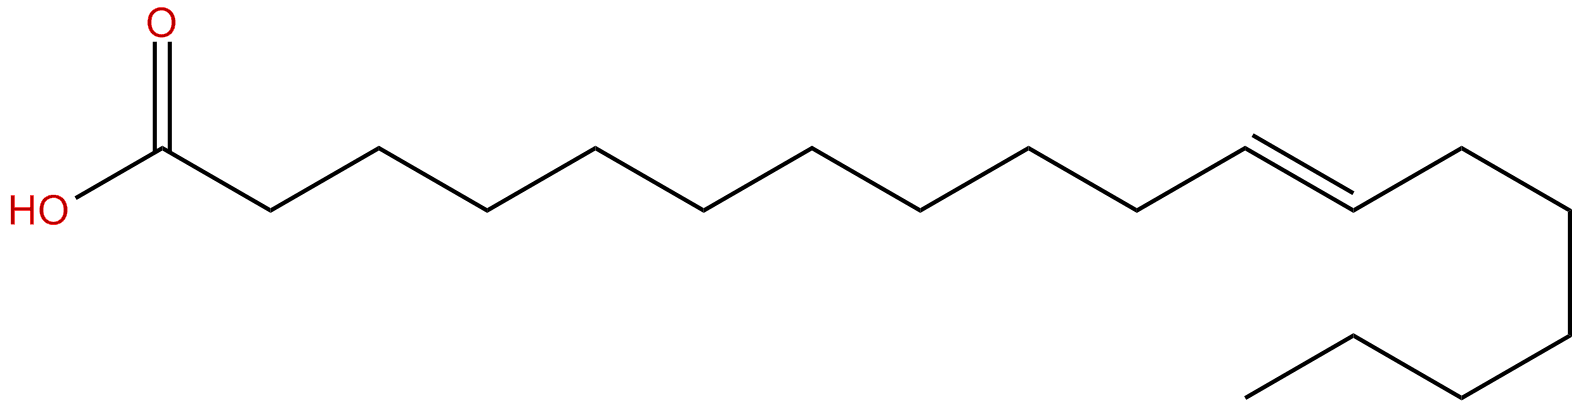 Image of trans-vaccenic acid